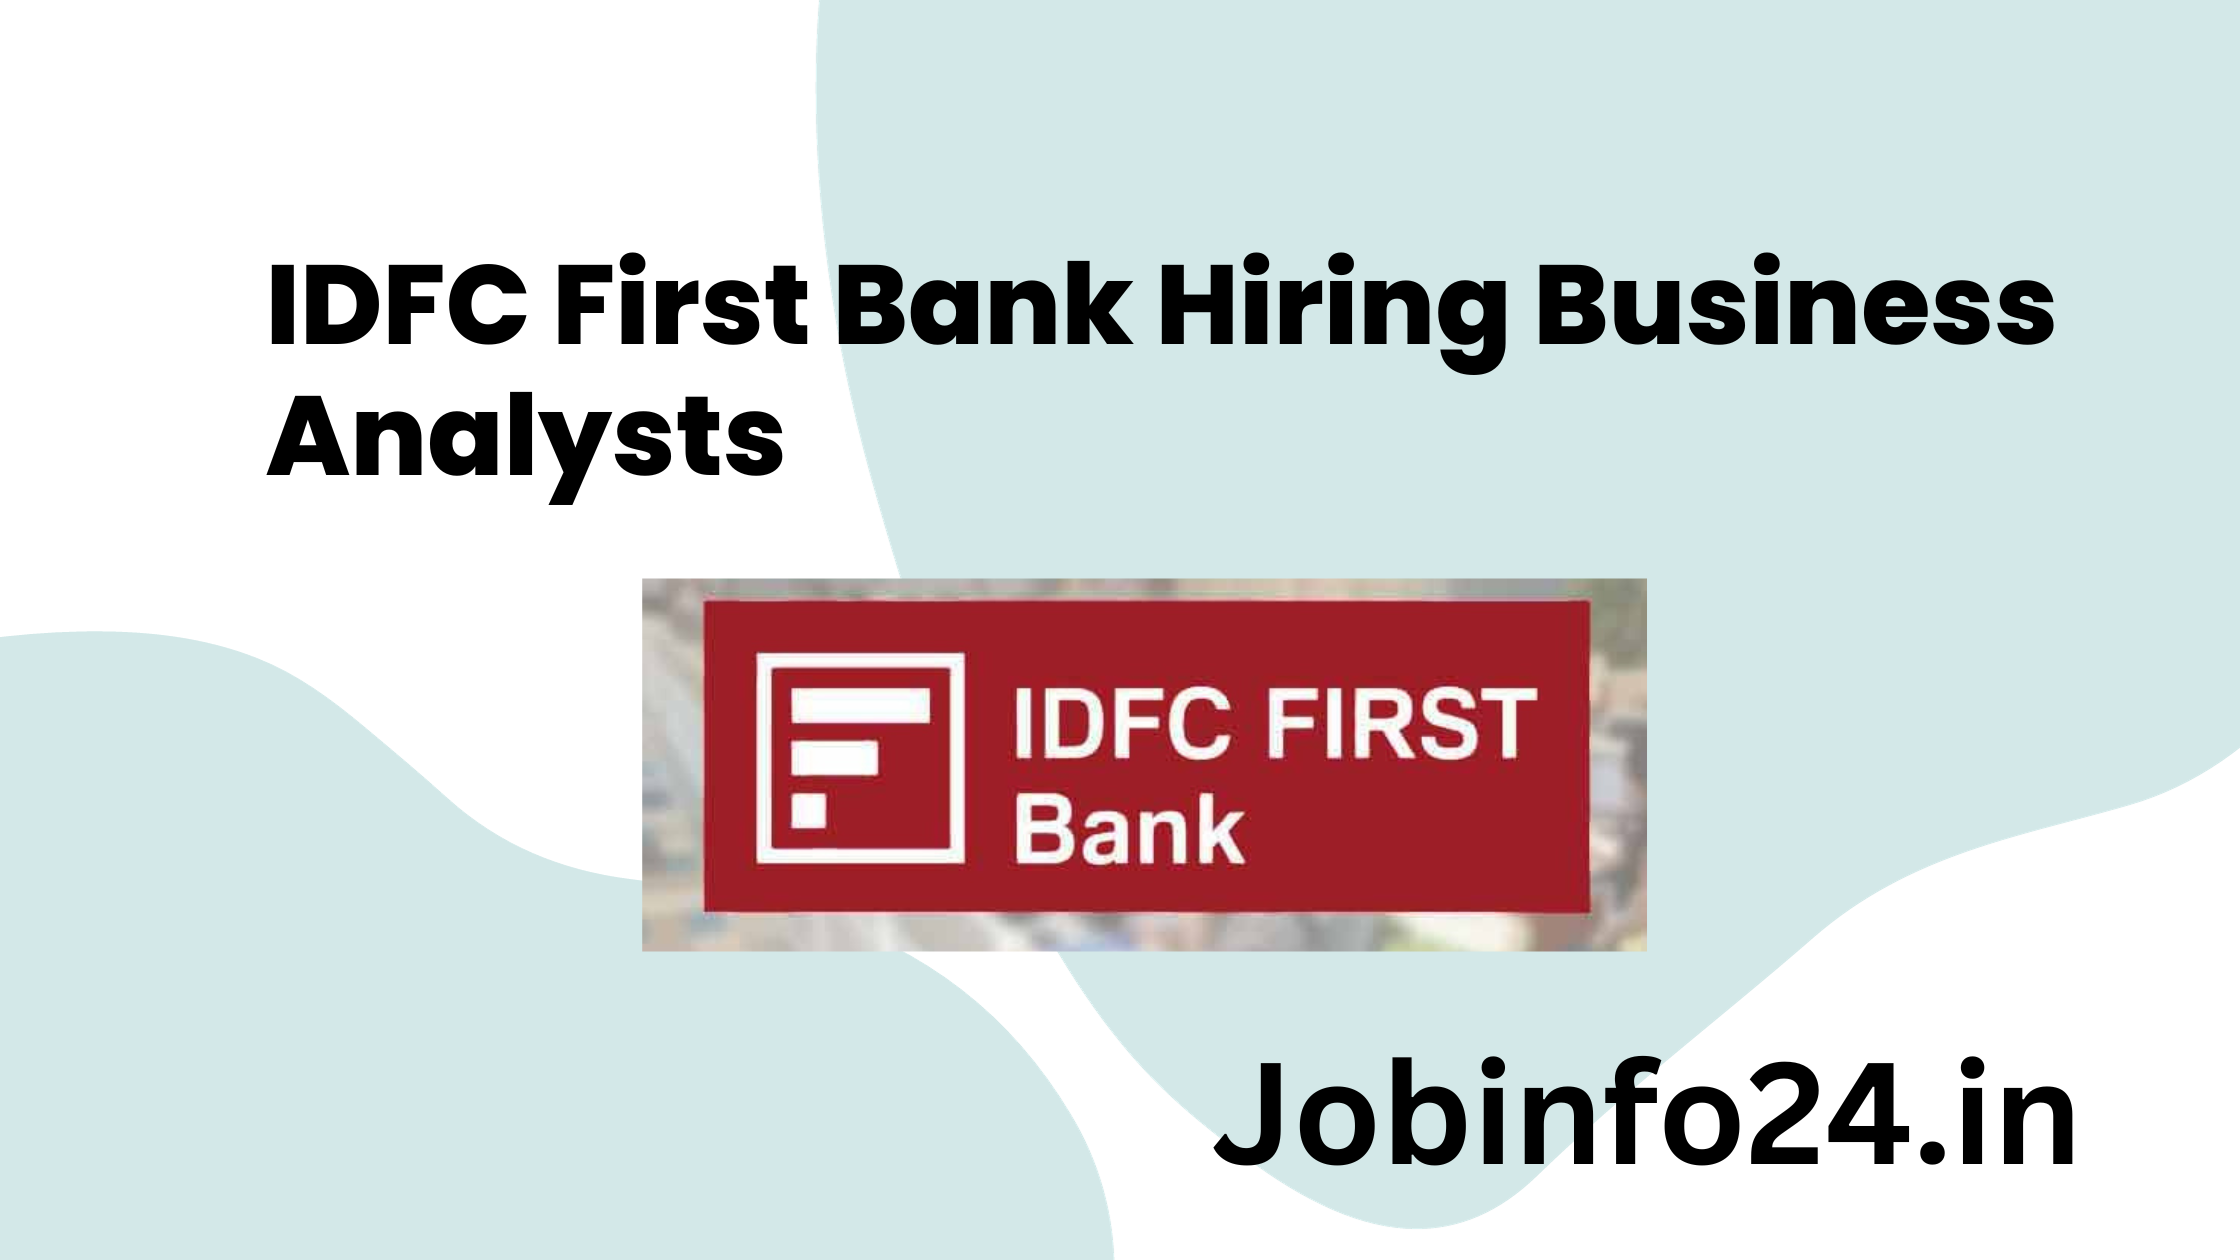 IDFC First Bank Hiring Business Analysts